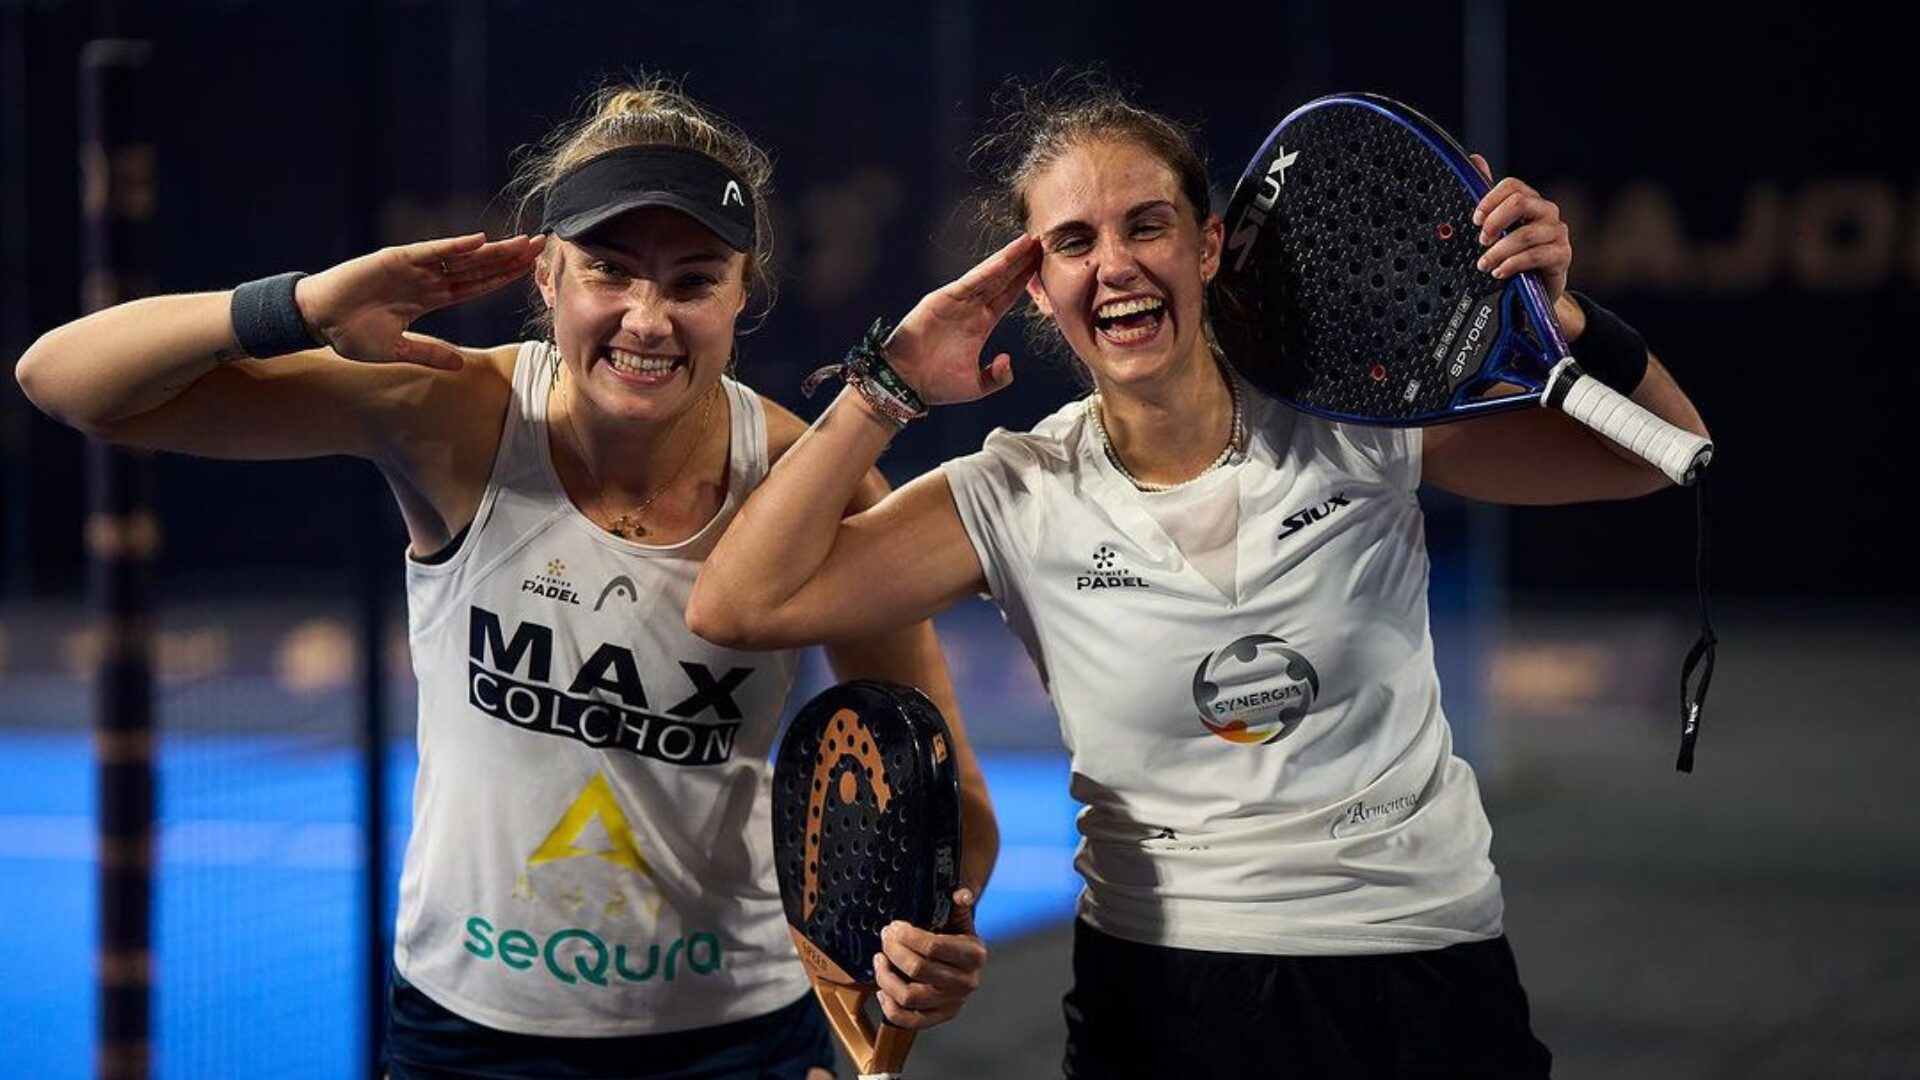 Qatar Major – Sharifova / Carnicero, het verrassende paar van de kwartfinales